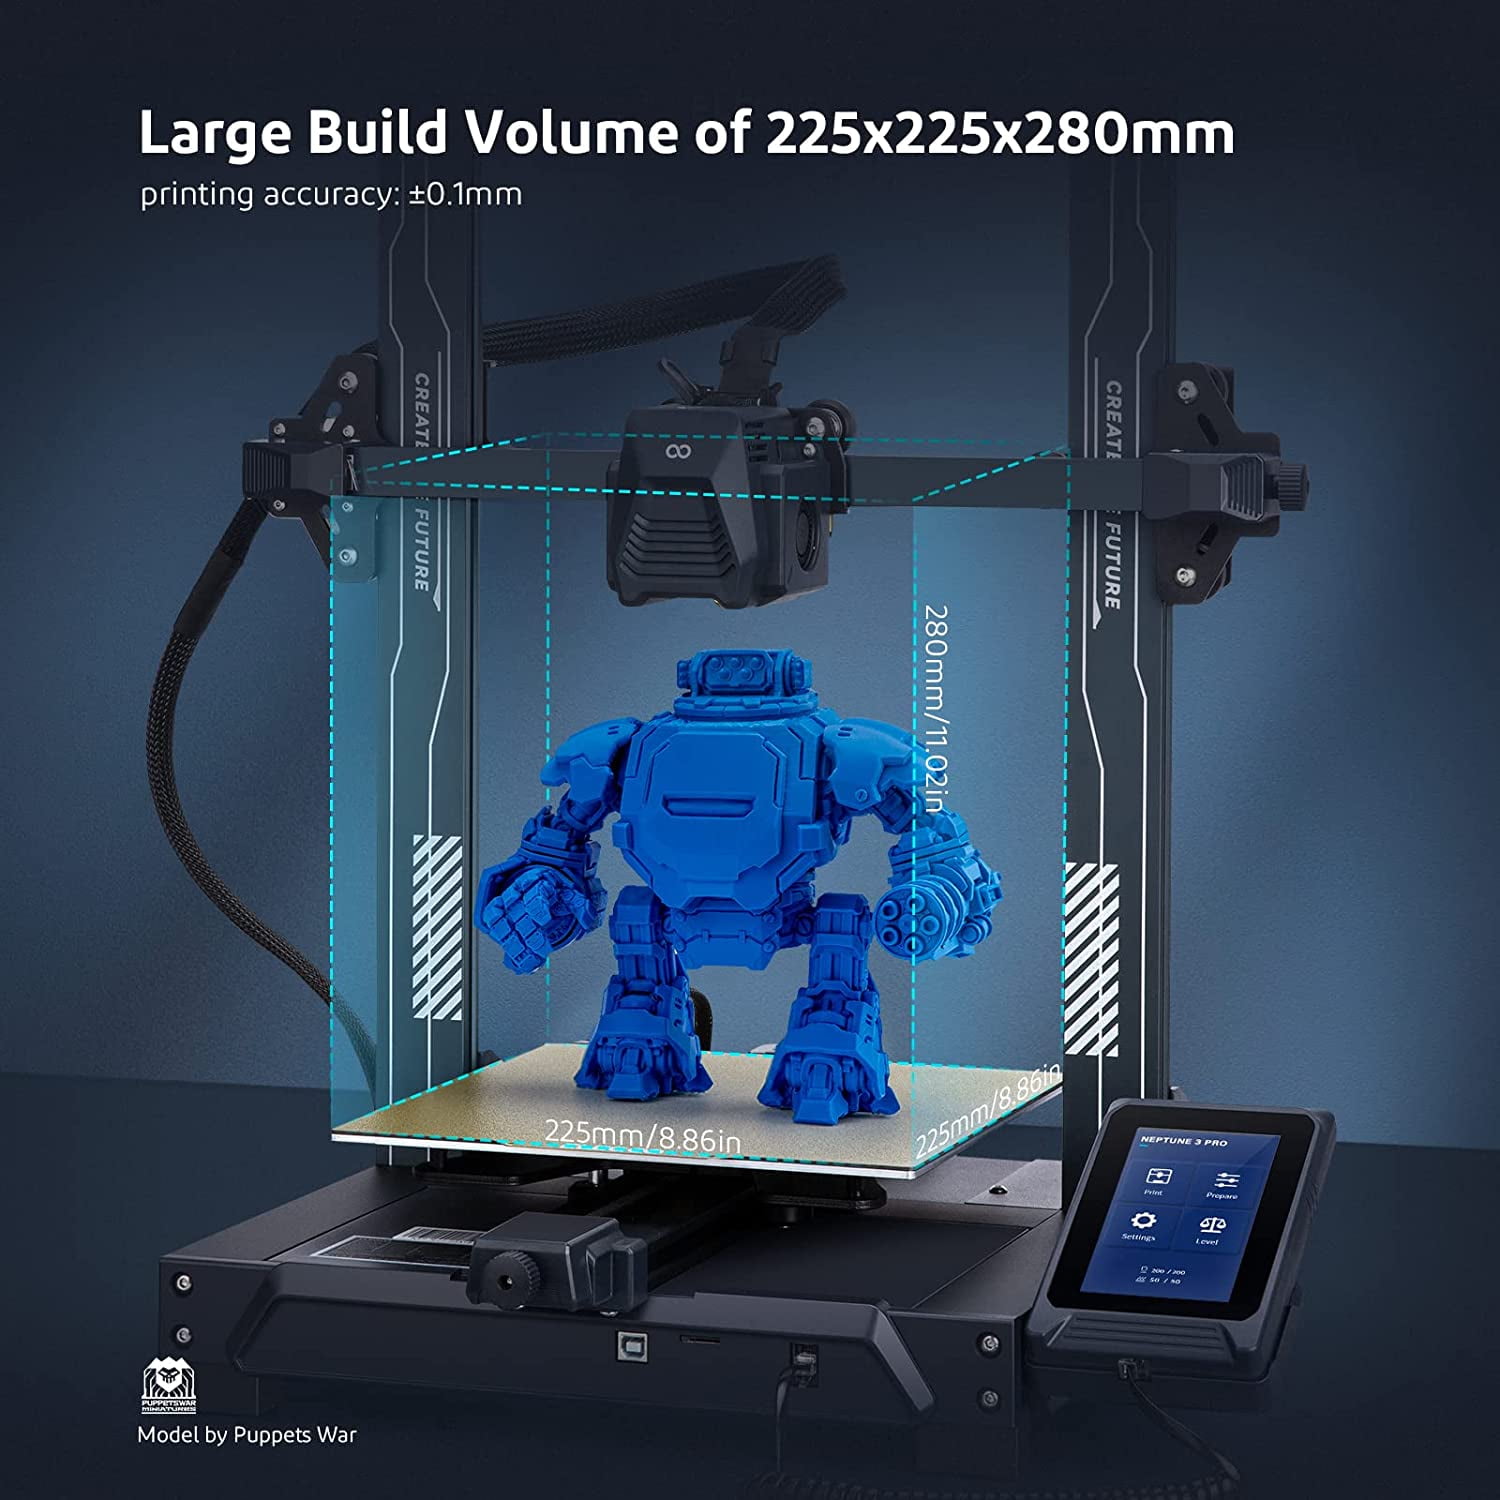 ELEGOO Neptune 4 Pro FDM 3D Printer DIY with Printing Size 225x225x265